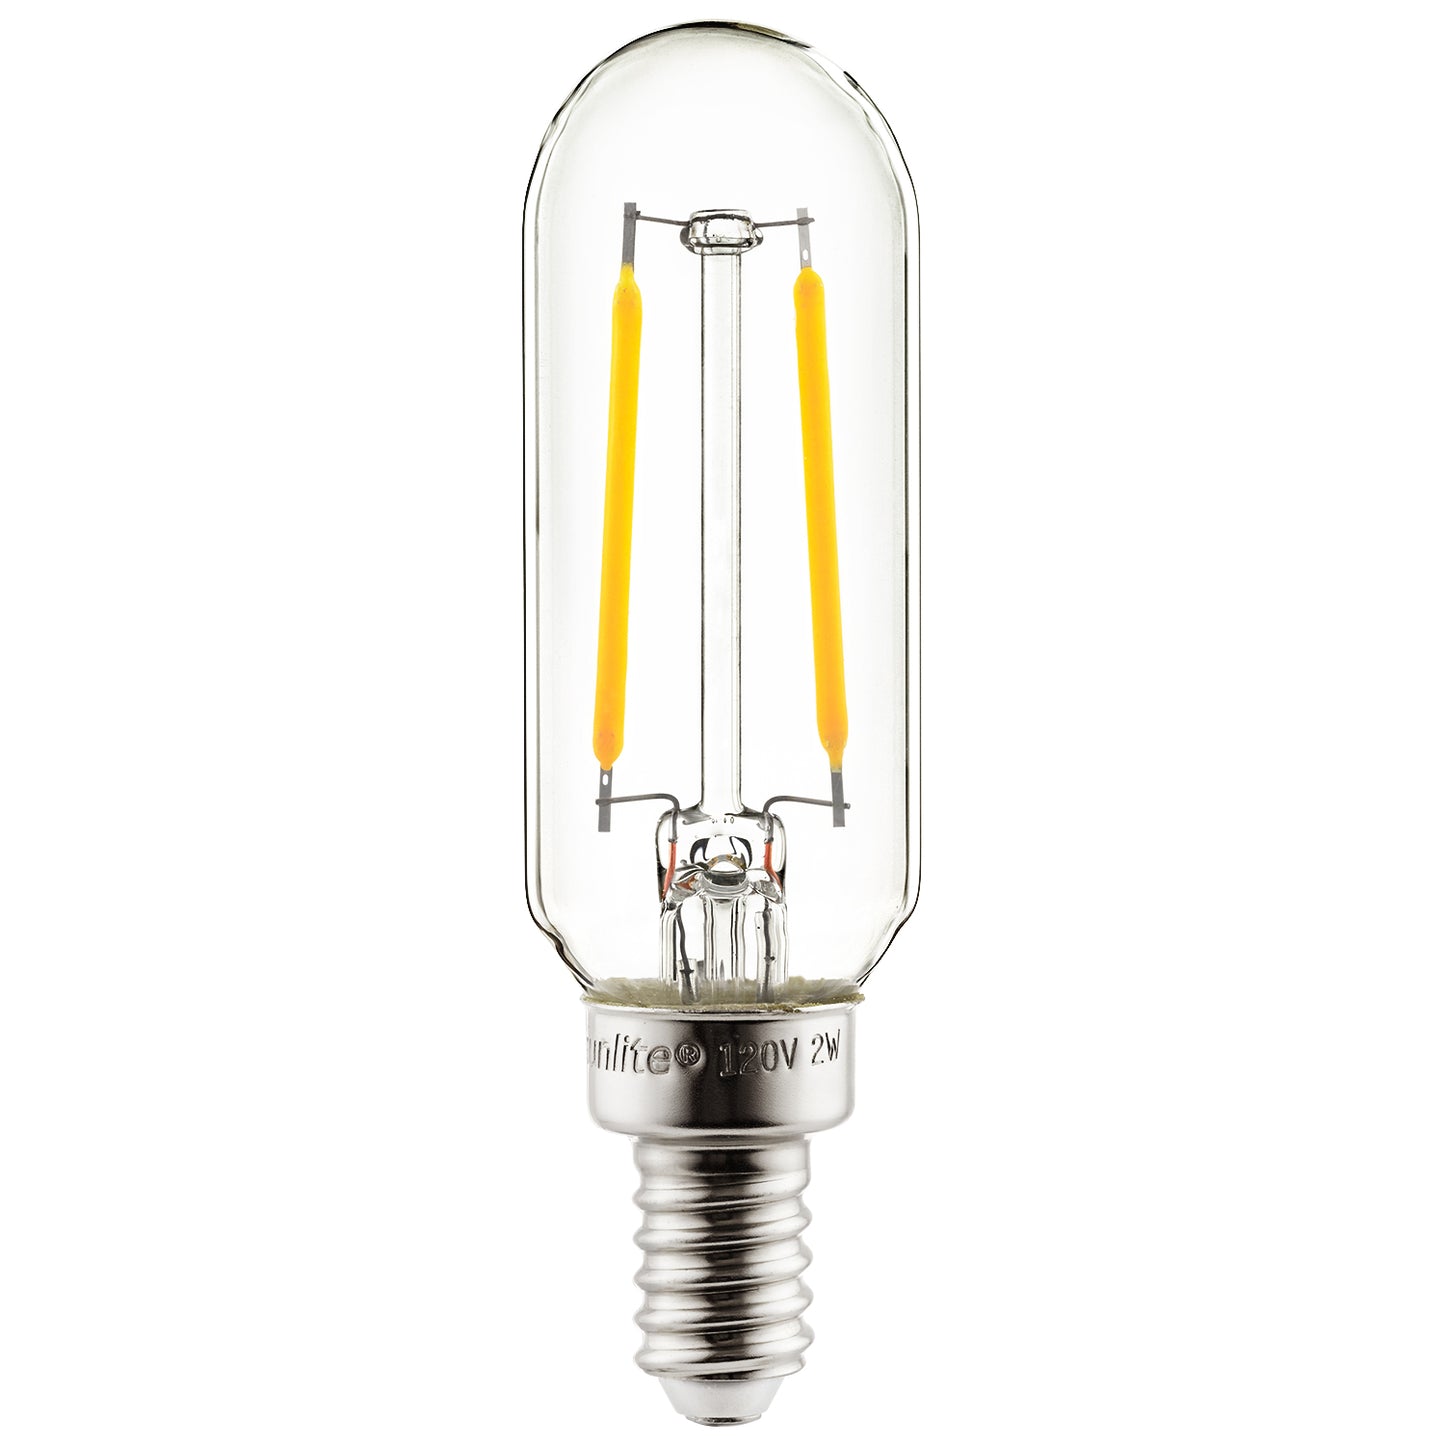 Sunlite 80502 LED Filament T8 Tubular Light Bulb, 2 Watts (25W Equivalent), 130 Lumens, Candelabra E12 Base, Dimmable, 85 mm, UL Listed, 2700K Warm White, 1 Pack